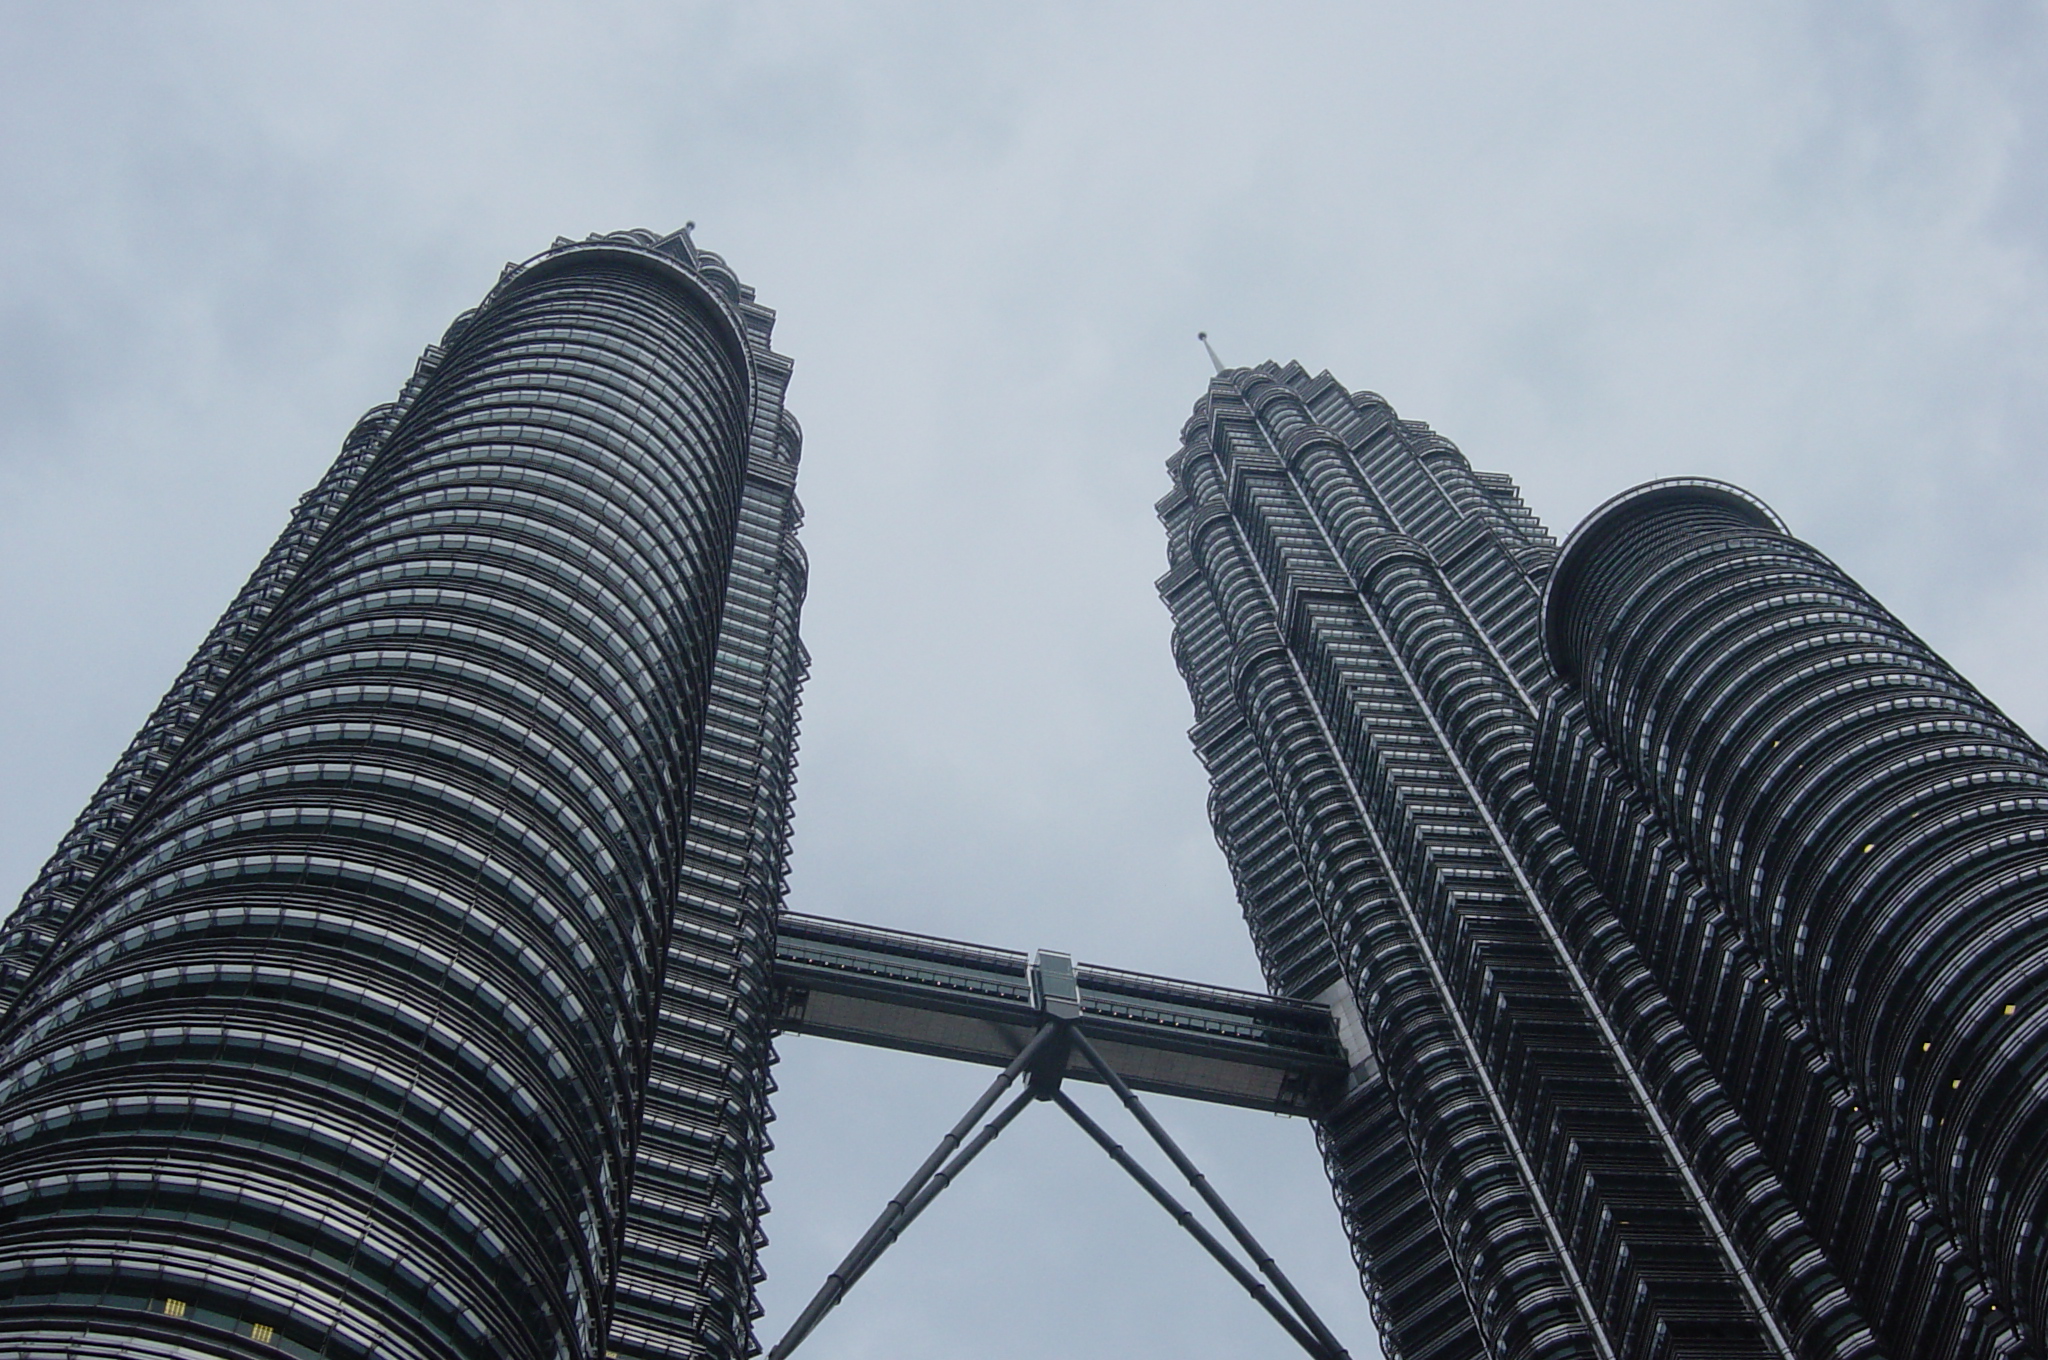 Exploring Kuala Lumpur : Malaysia (Dec'05) 10